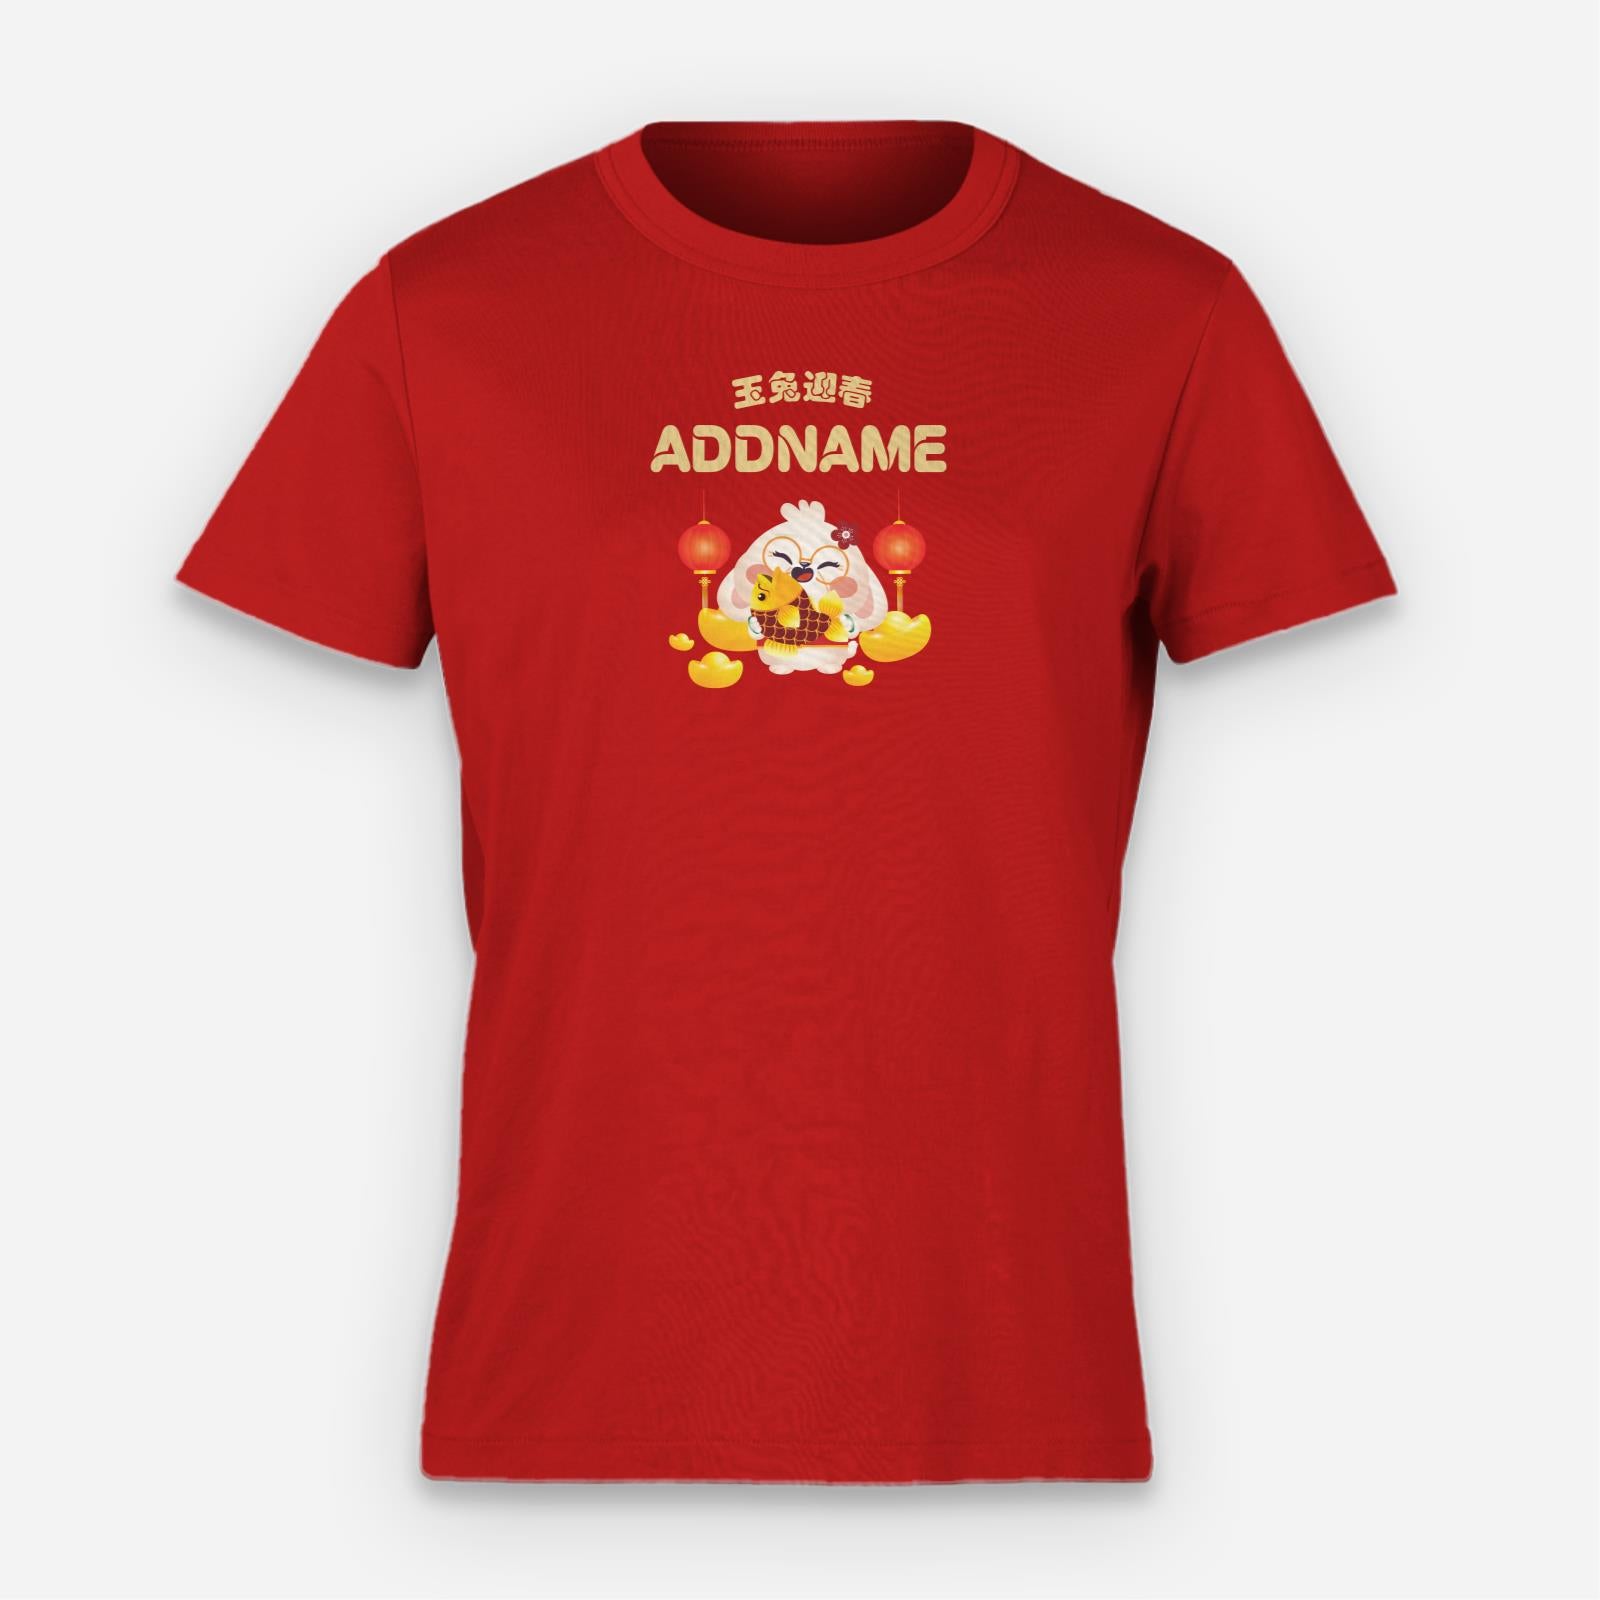 Cny Rabbit Family - Grandma Rabbit Slim Fit Women Tee Shirt with English Personalization